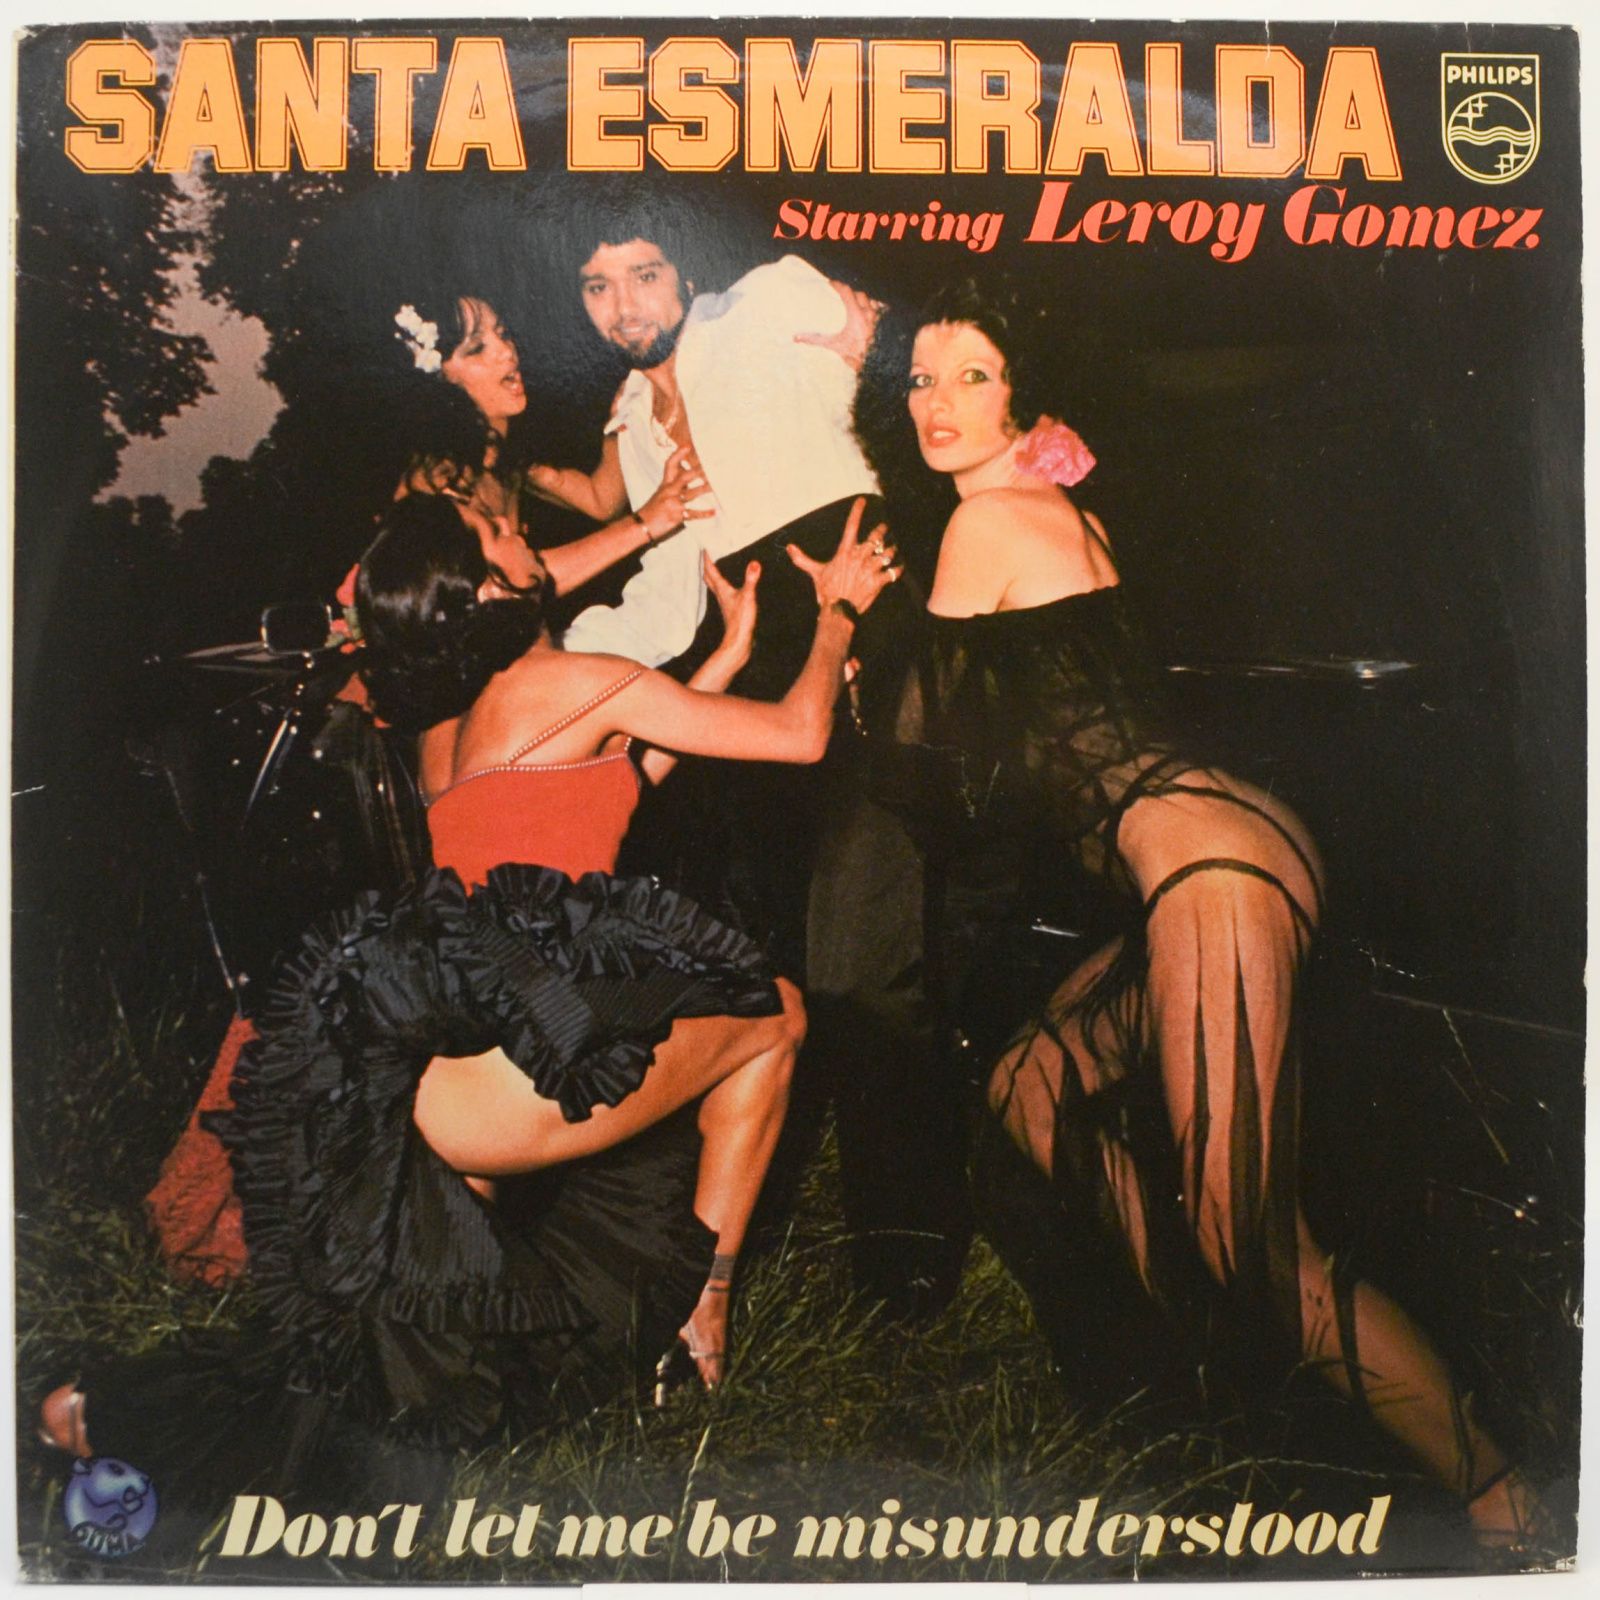 Santa Esmeralda Starring Leroy Gomez — Don't Let Me Be Misunderstood, 1977